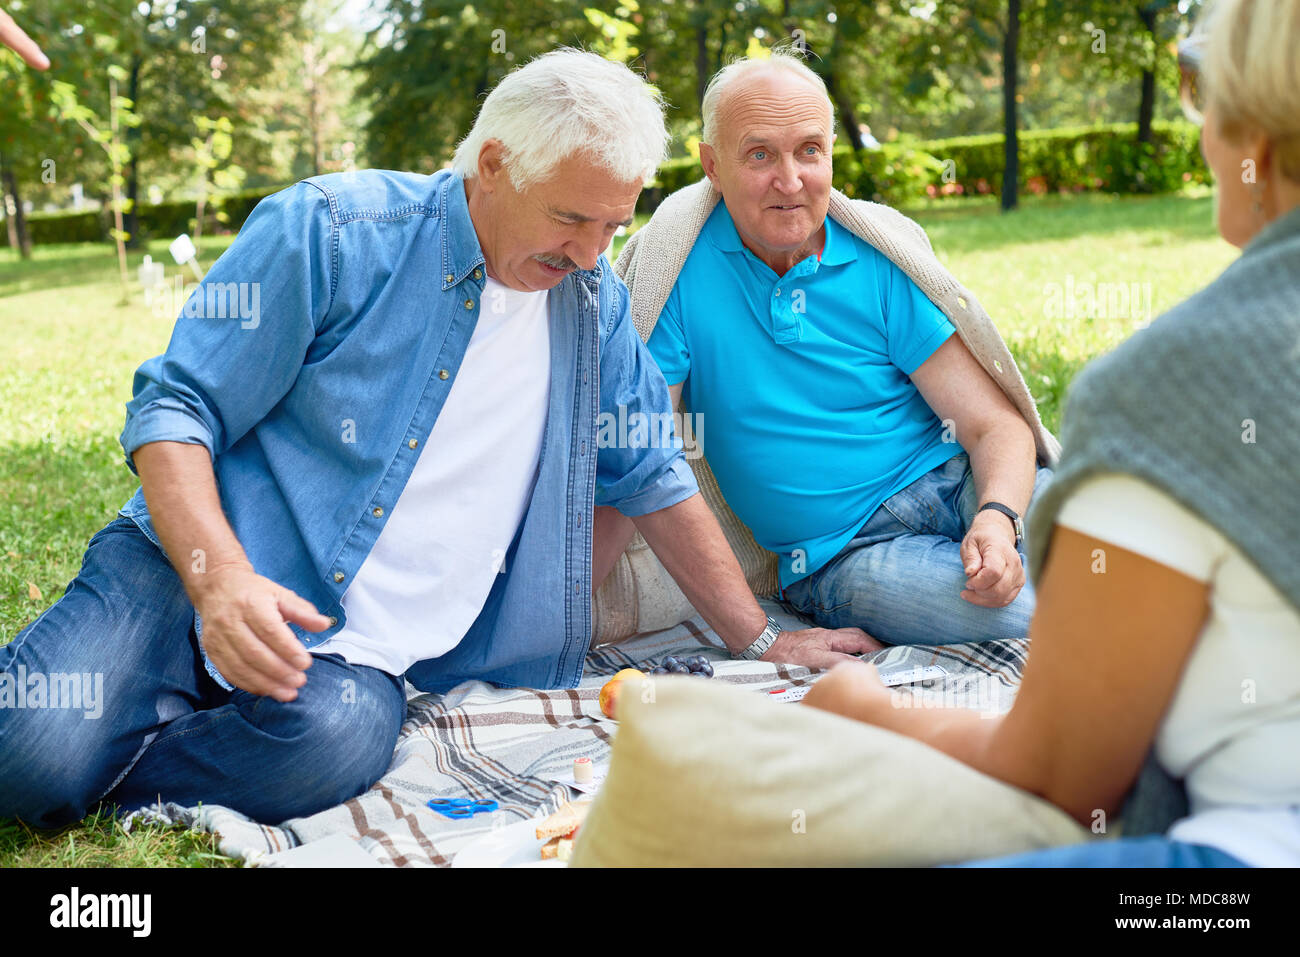 Group of Seniors Enjoying Picnic in Park Stock Photo